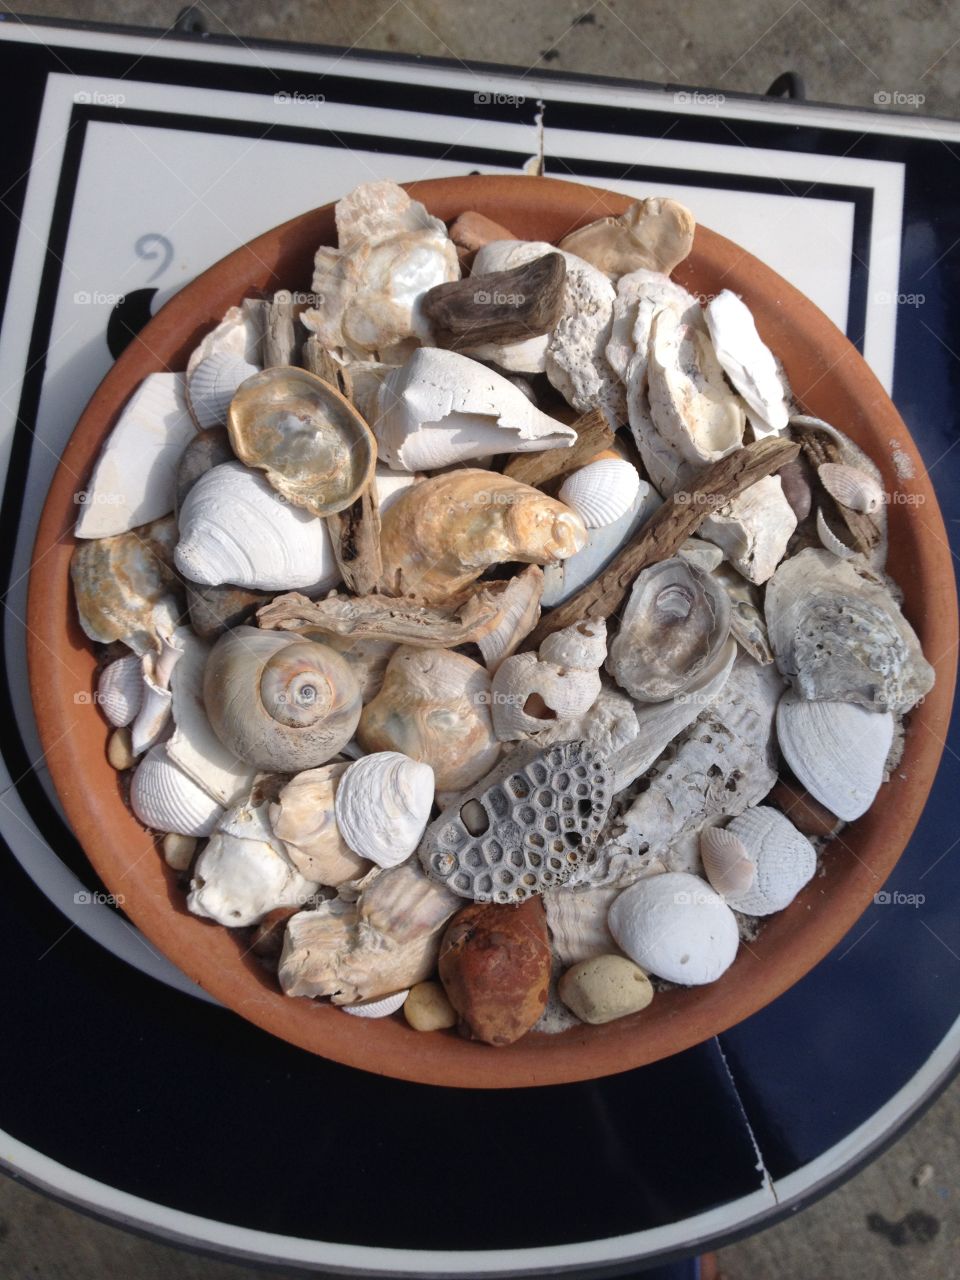 Shells of the Gulf Coast